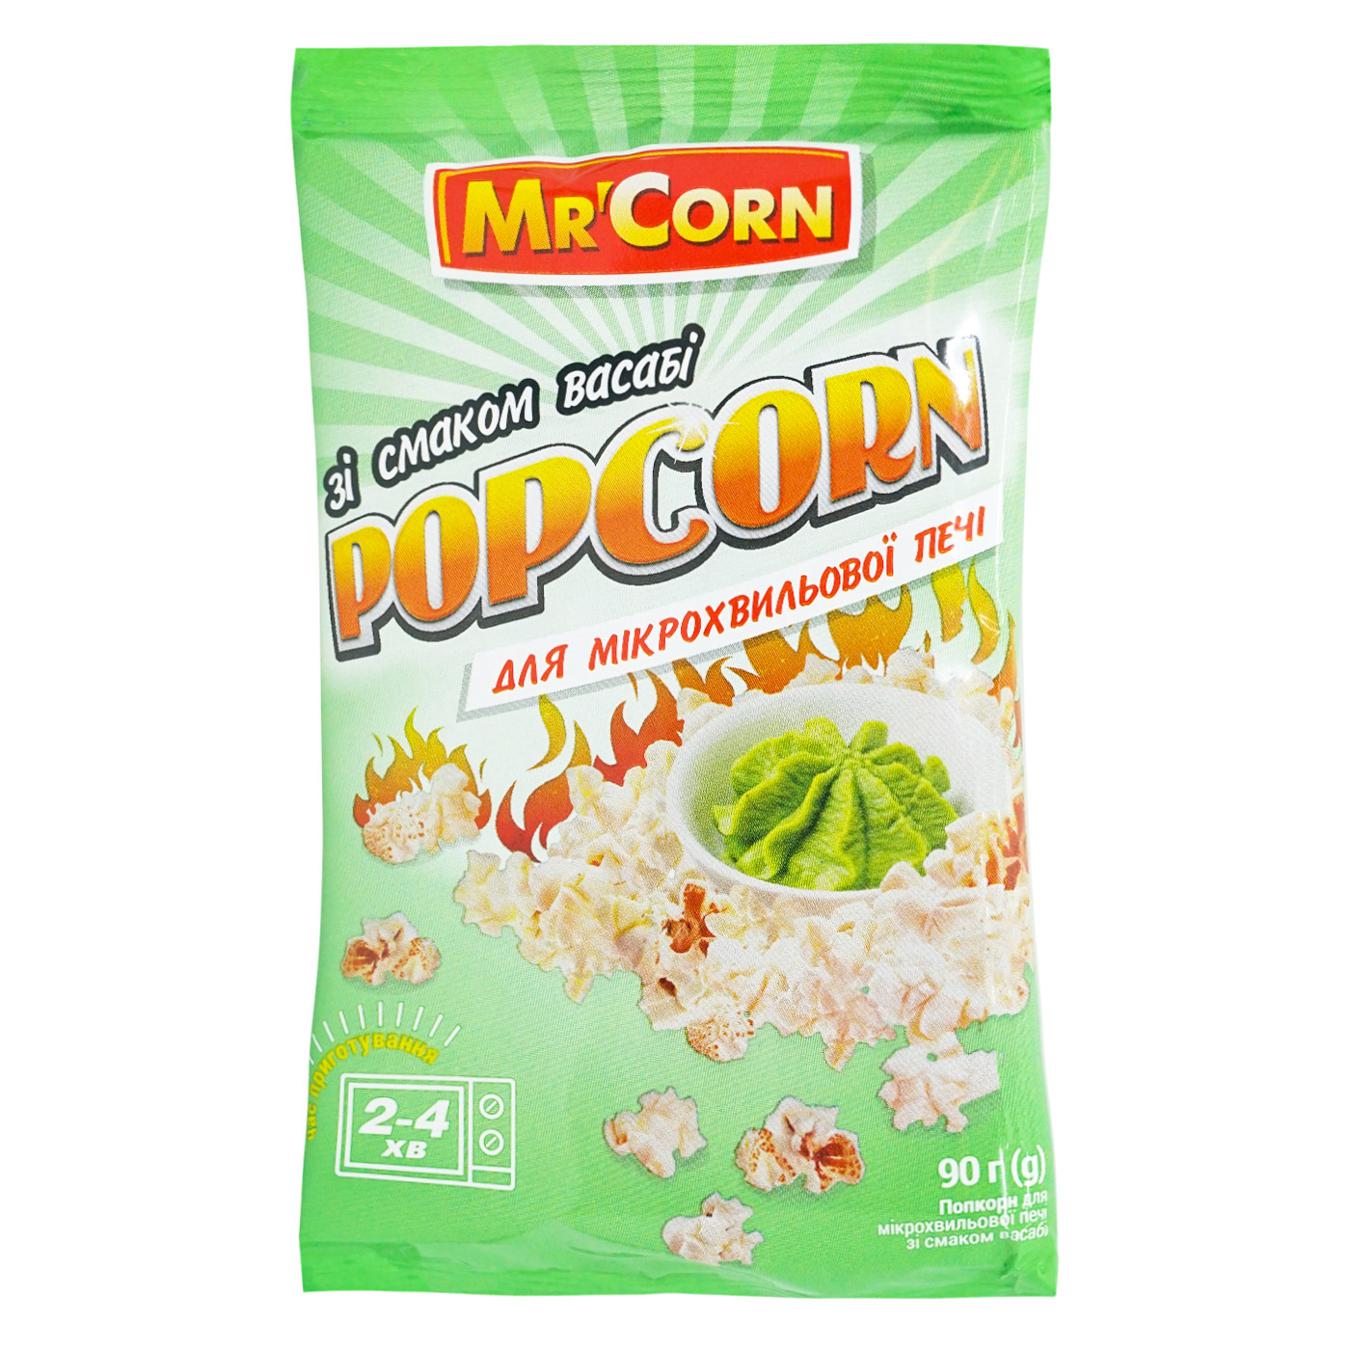 Popcorn Mr'Corn with wasabi flavor 90g